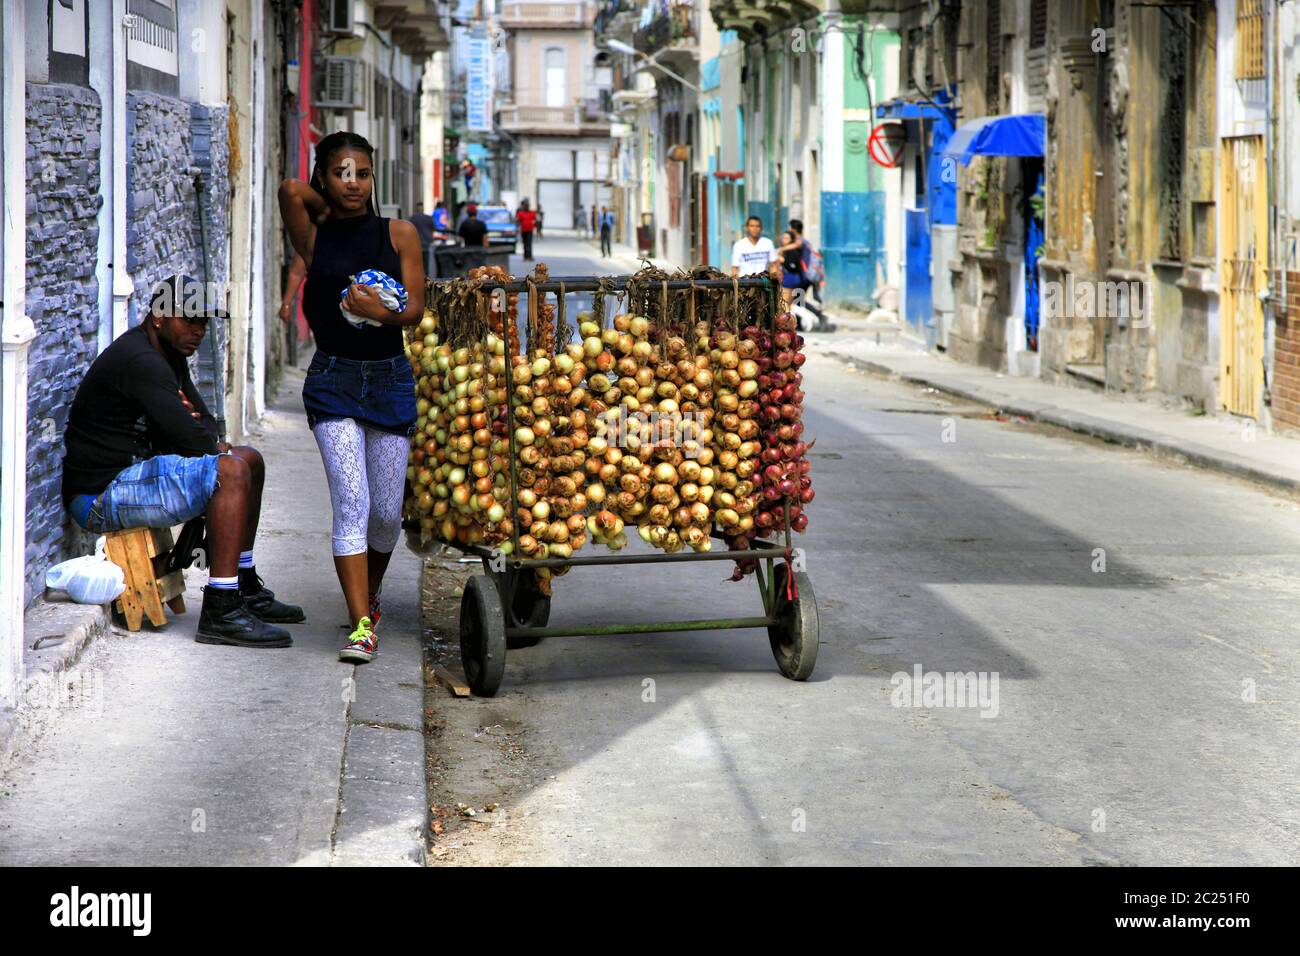 Selling onions on the street in Old Havana, Cuba Stock Photo